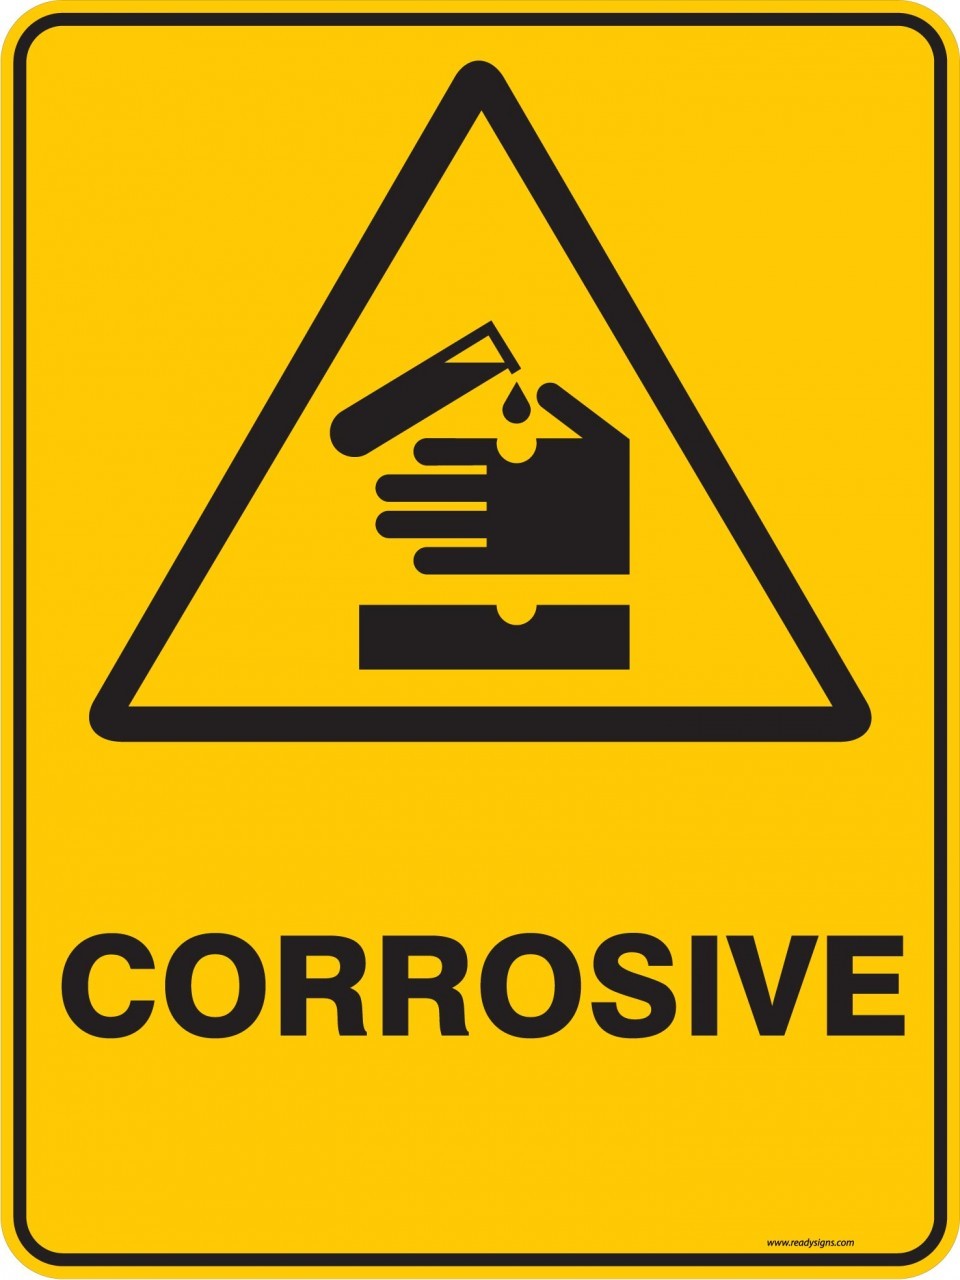 Warning Sign - CORROSIVE - Ready Signs